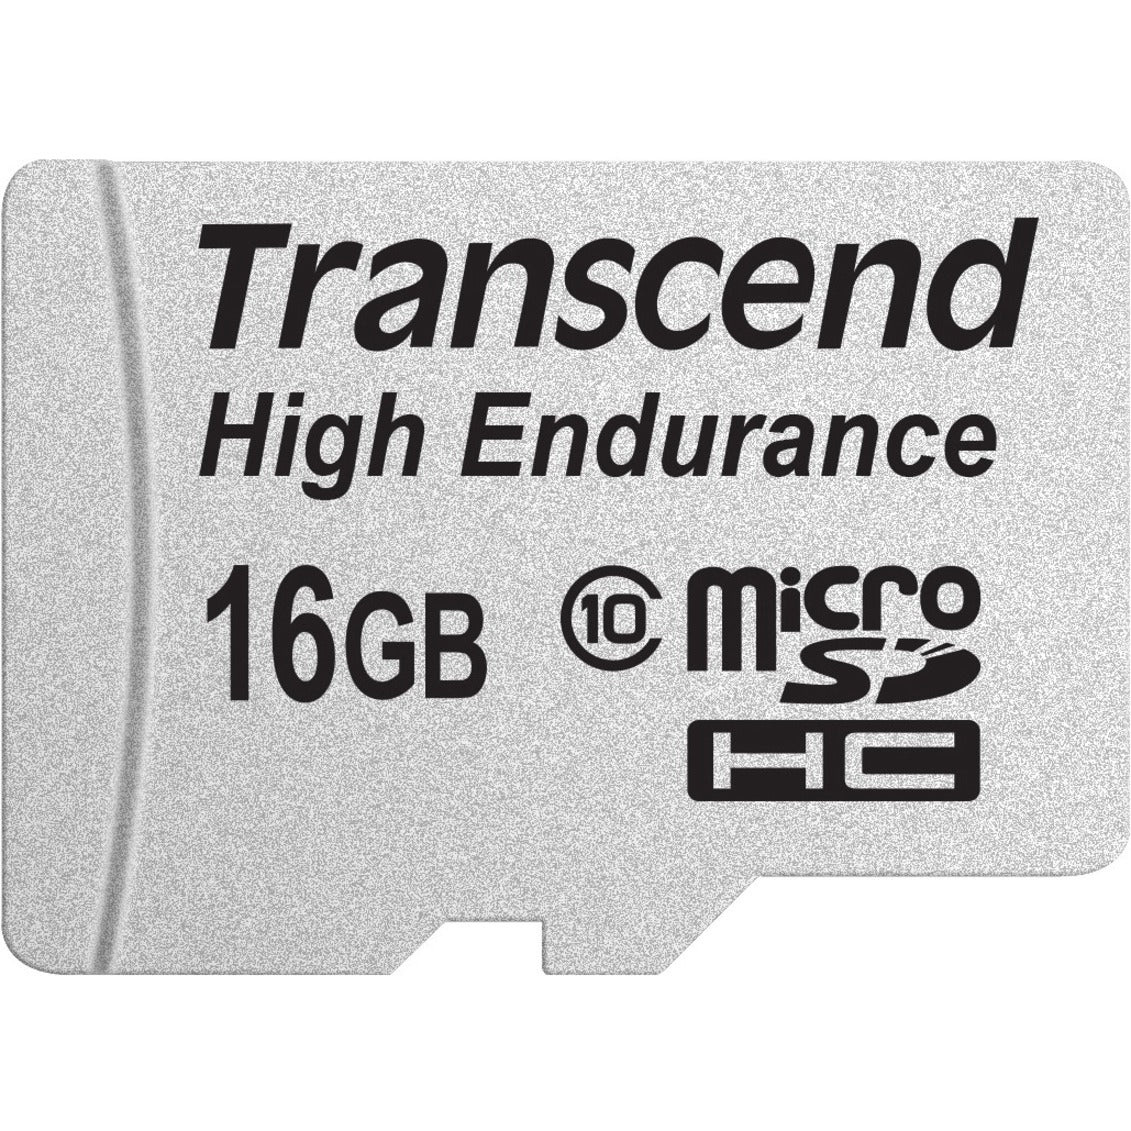 Transcend TS16GUSDHC10V 16GB High Endurance microSDHC Card, Class 10, 21 MB/s Read Speed, 20 MB/s Write Speed